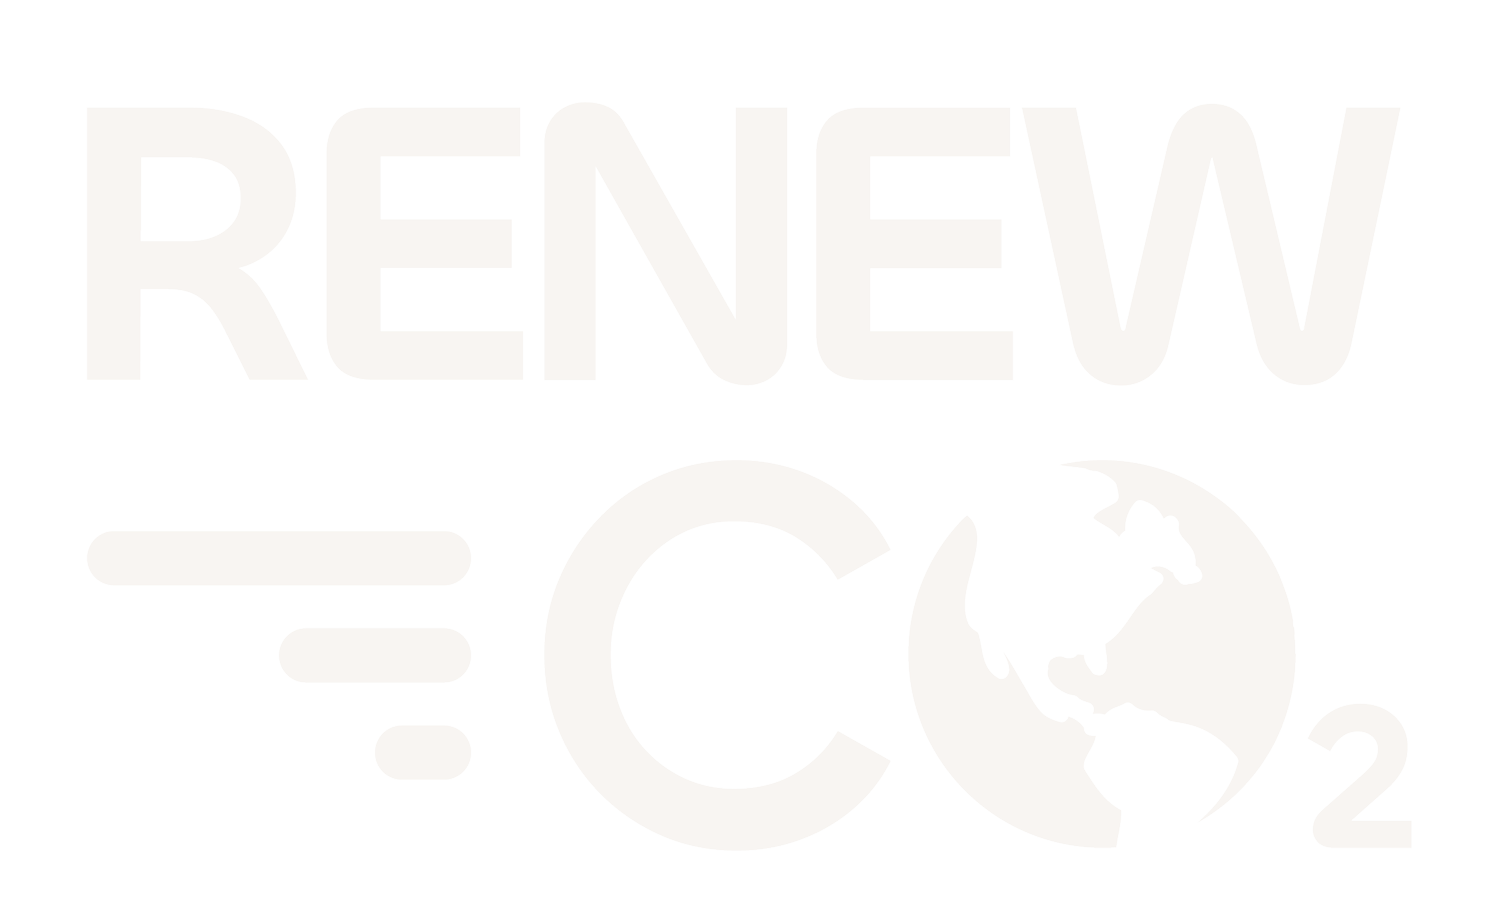 RenewCO₂